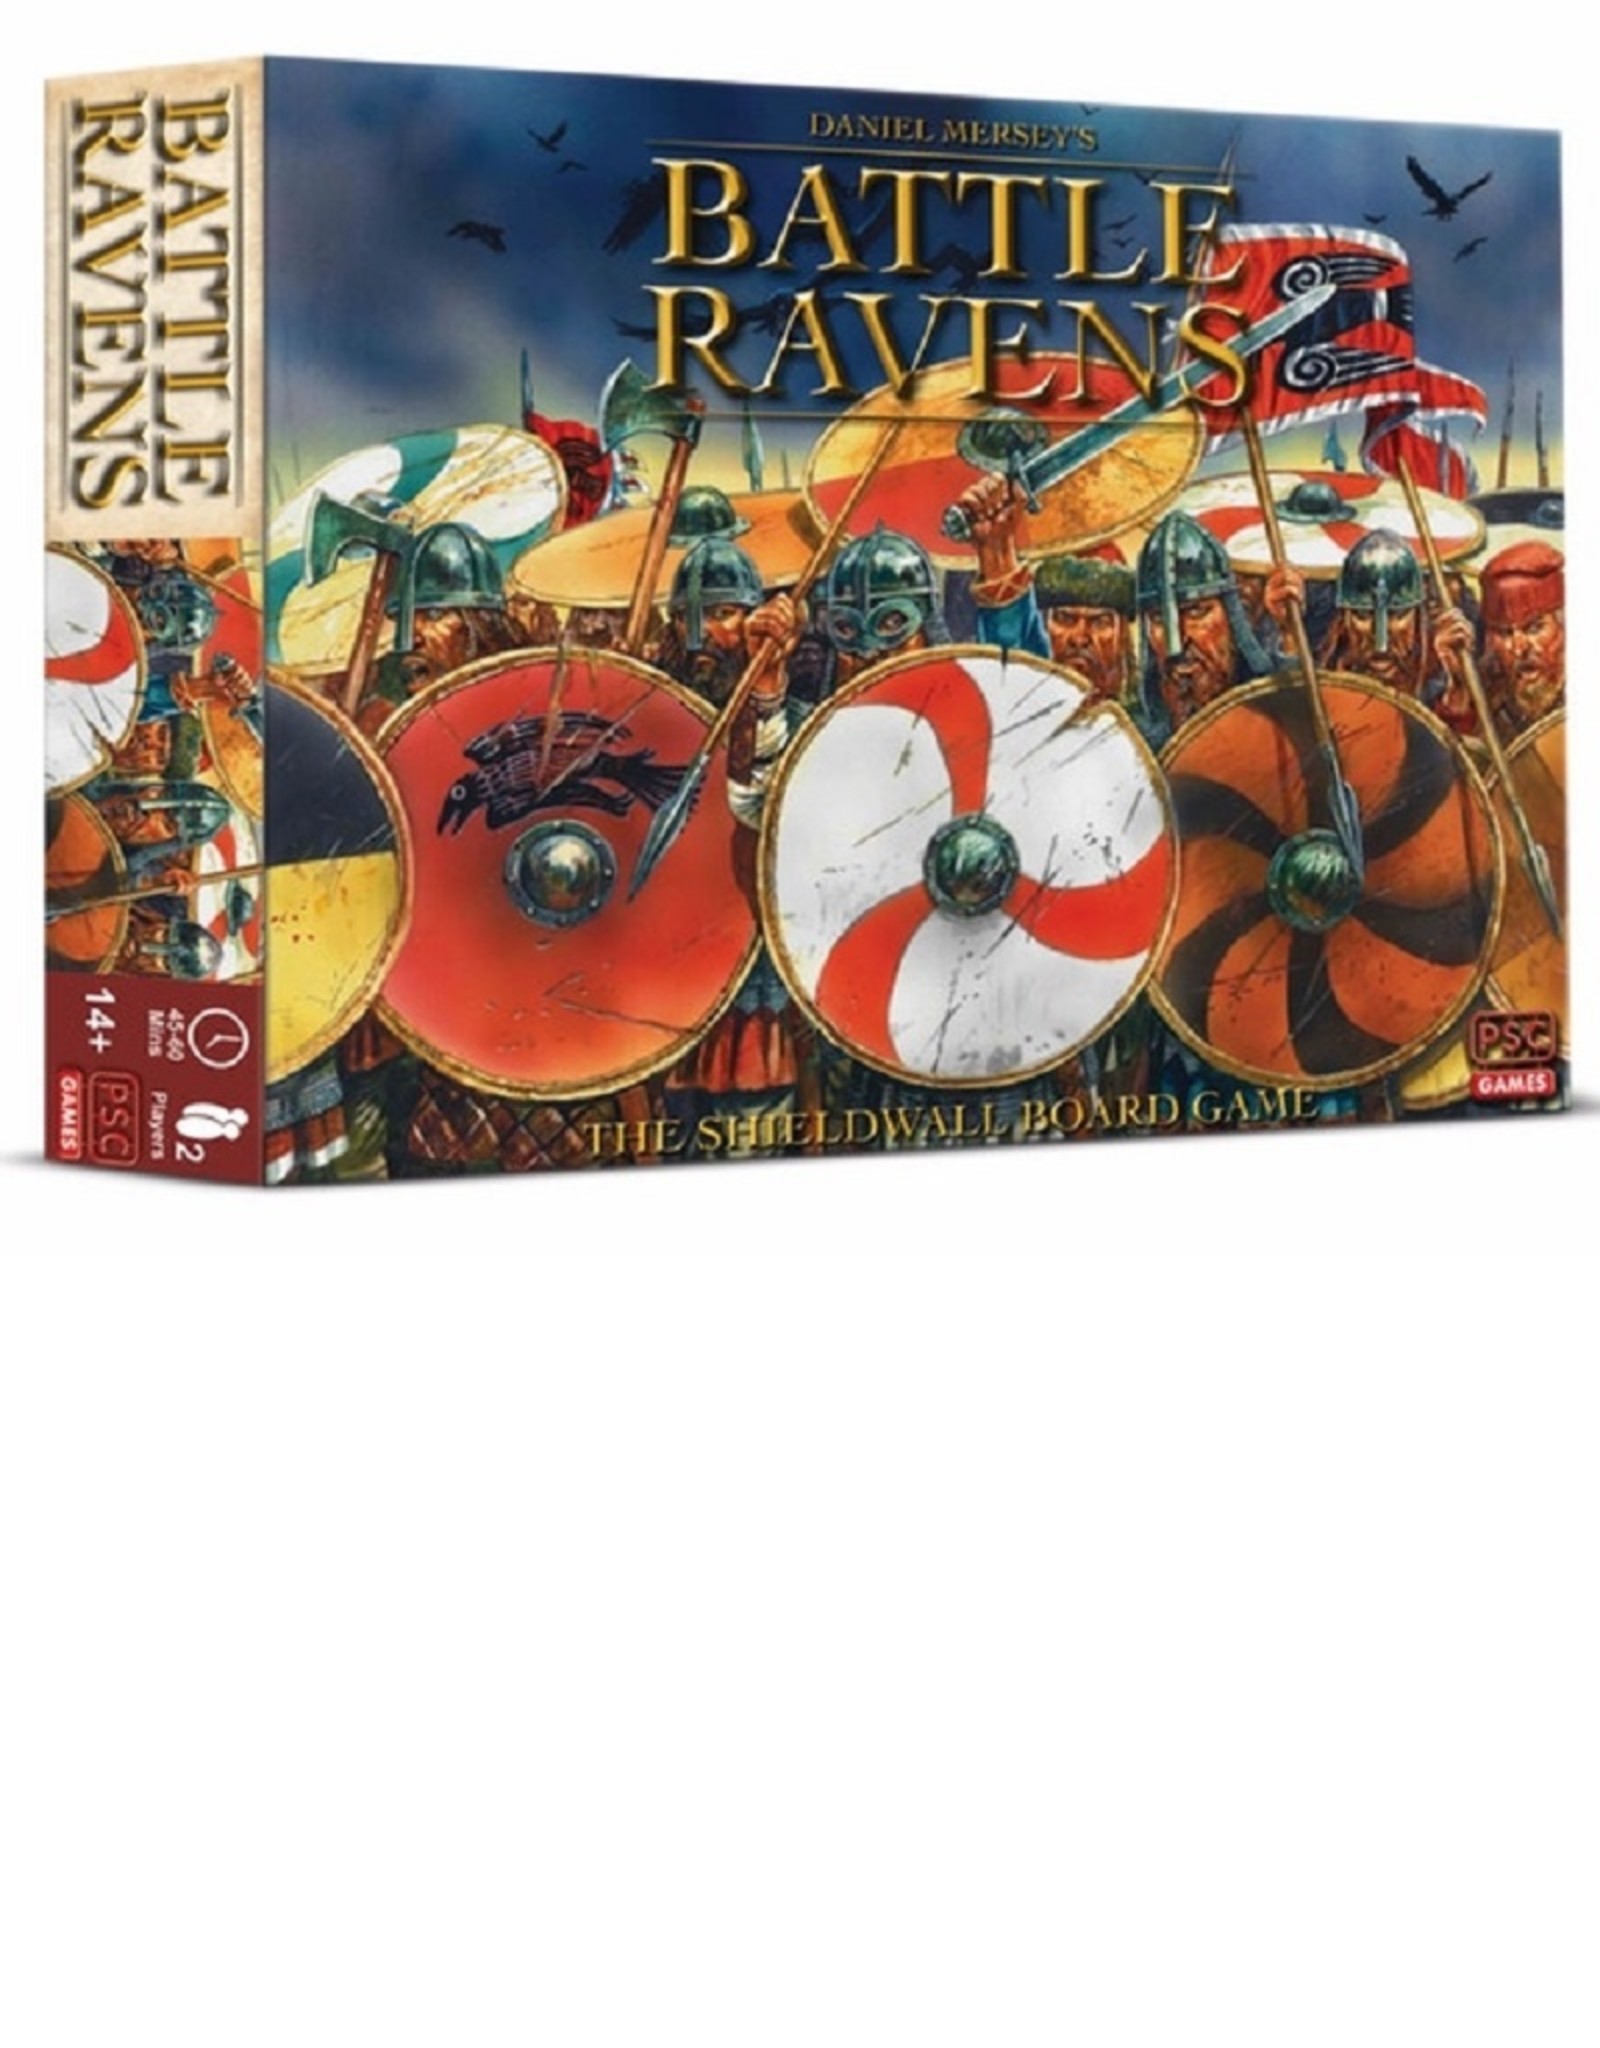 Plastic Soldier Company Battle Ravens Board game